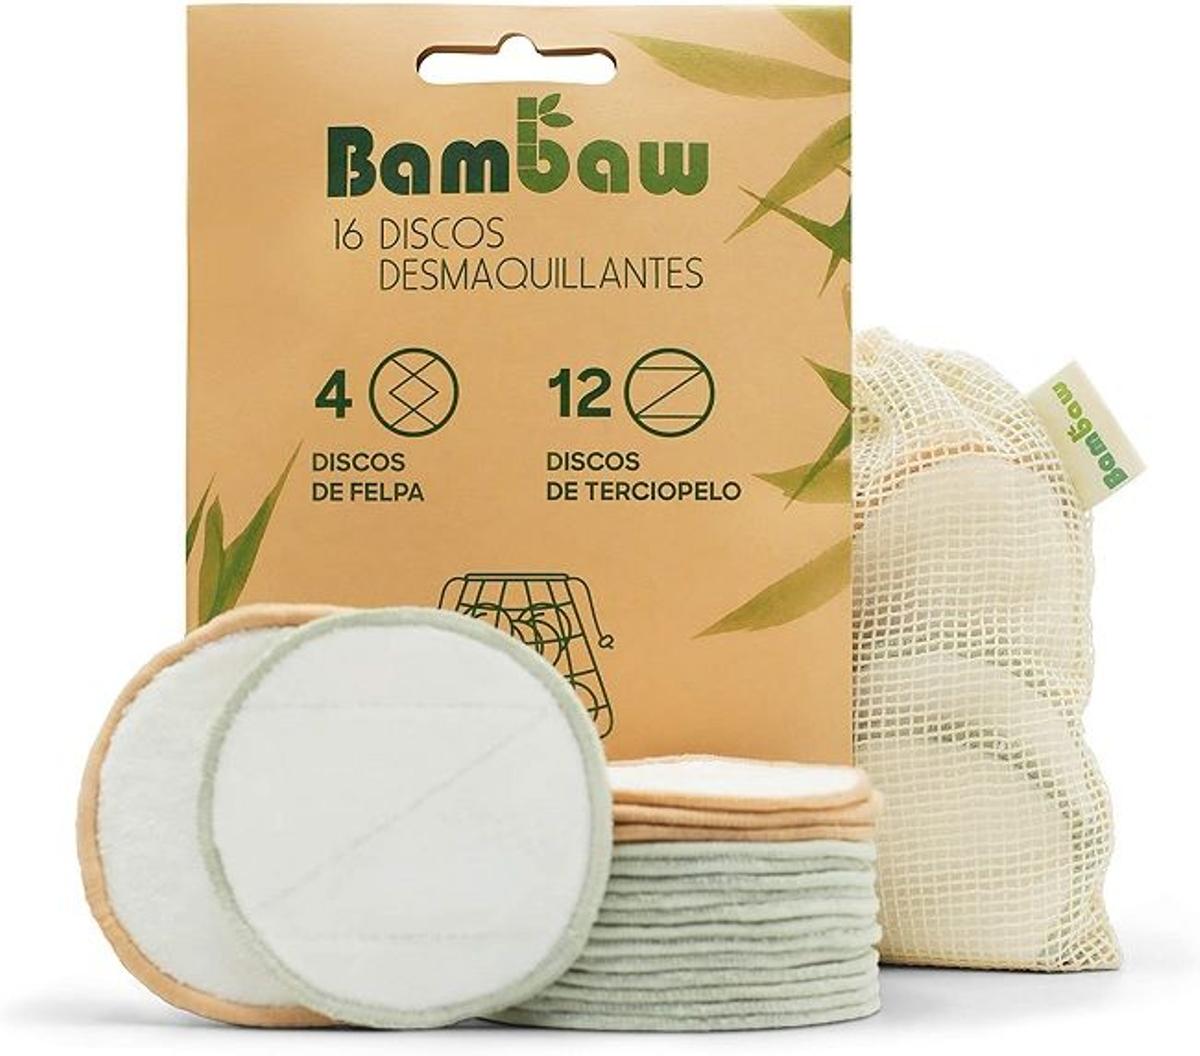 Discos desmaquillantes reutilizables de fibra de bambú, de Bambaw